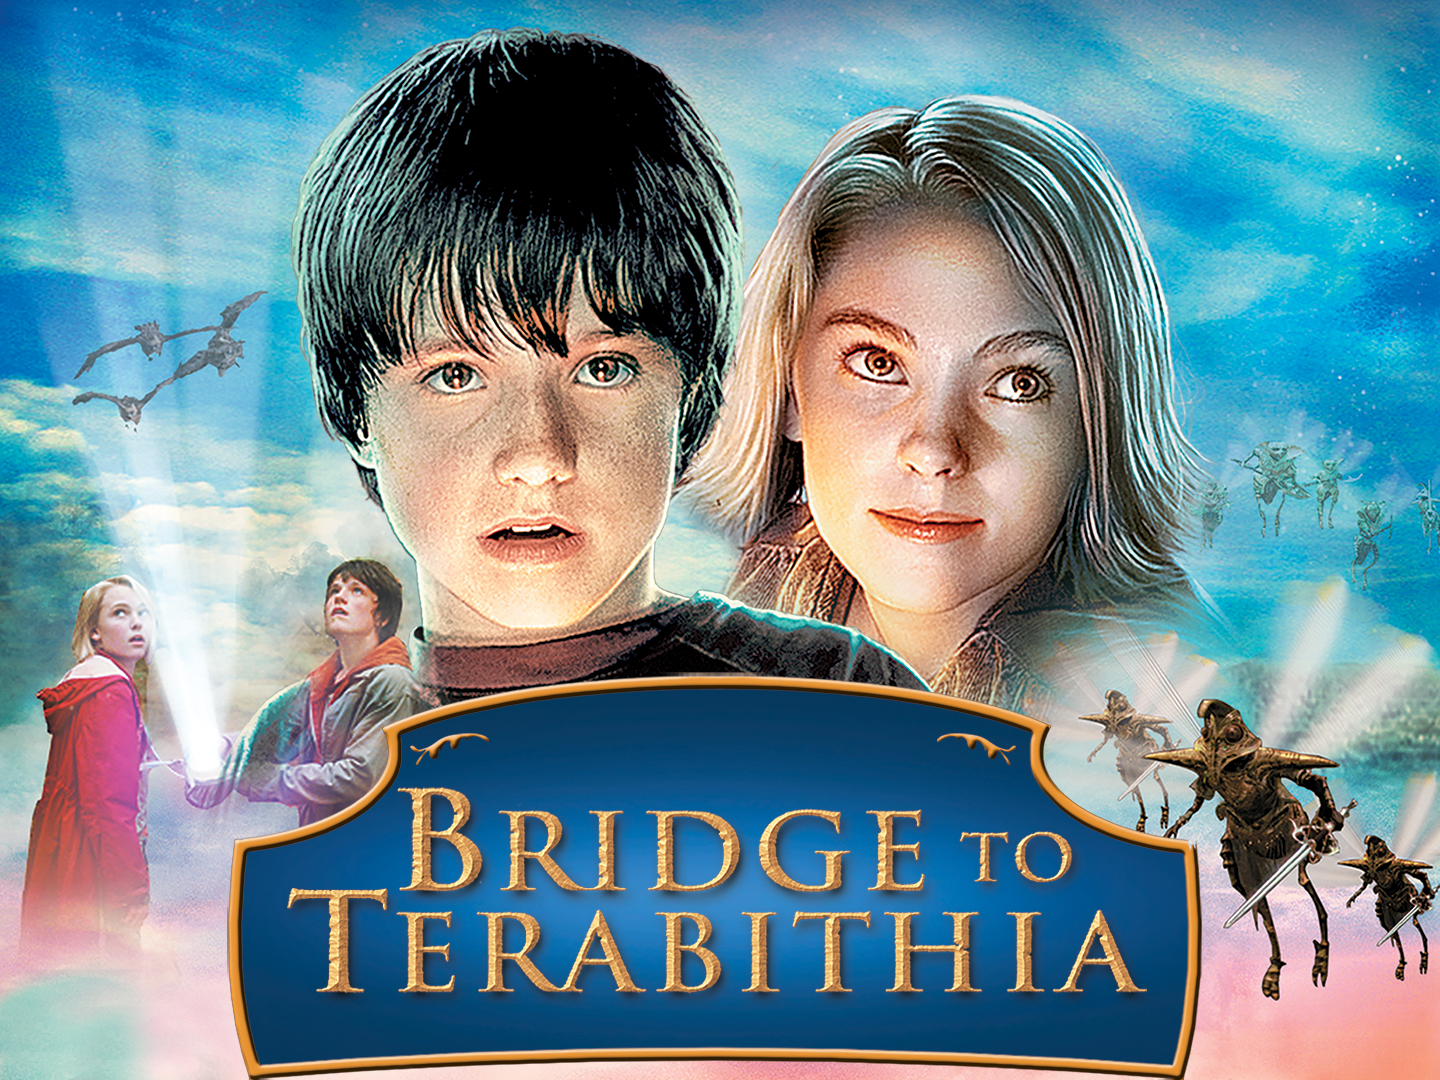 Watch Bridge to Terabithia Online with NEON